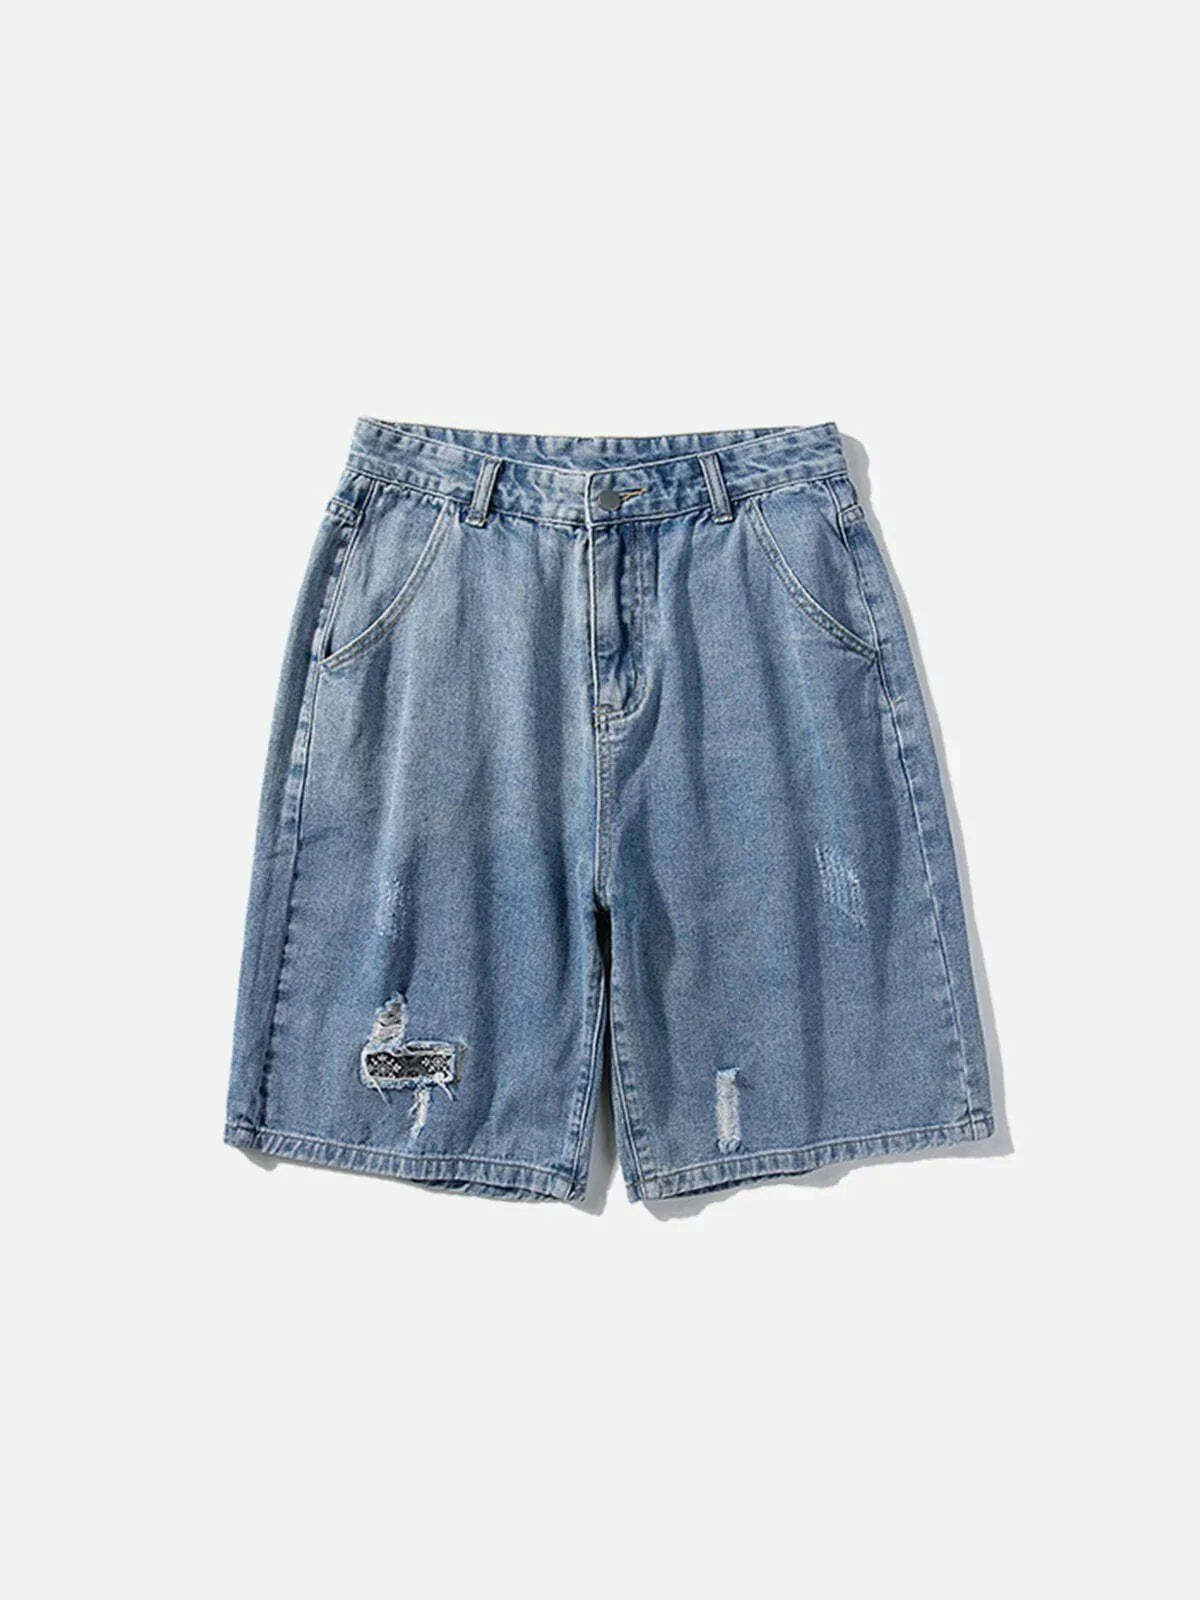 retro shredded denim shorts edgy streetwear staple 7968